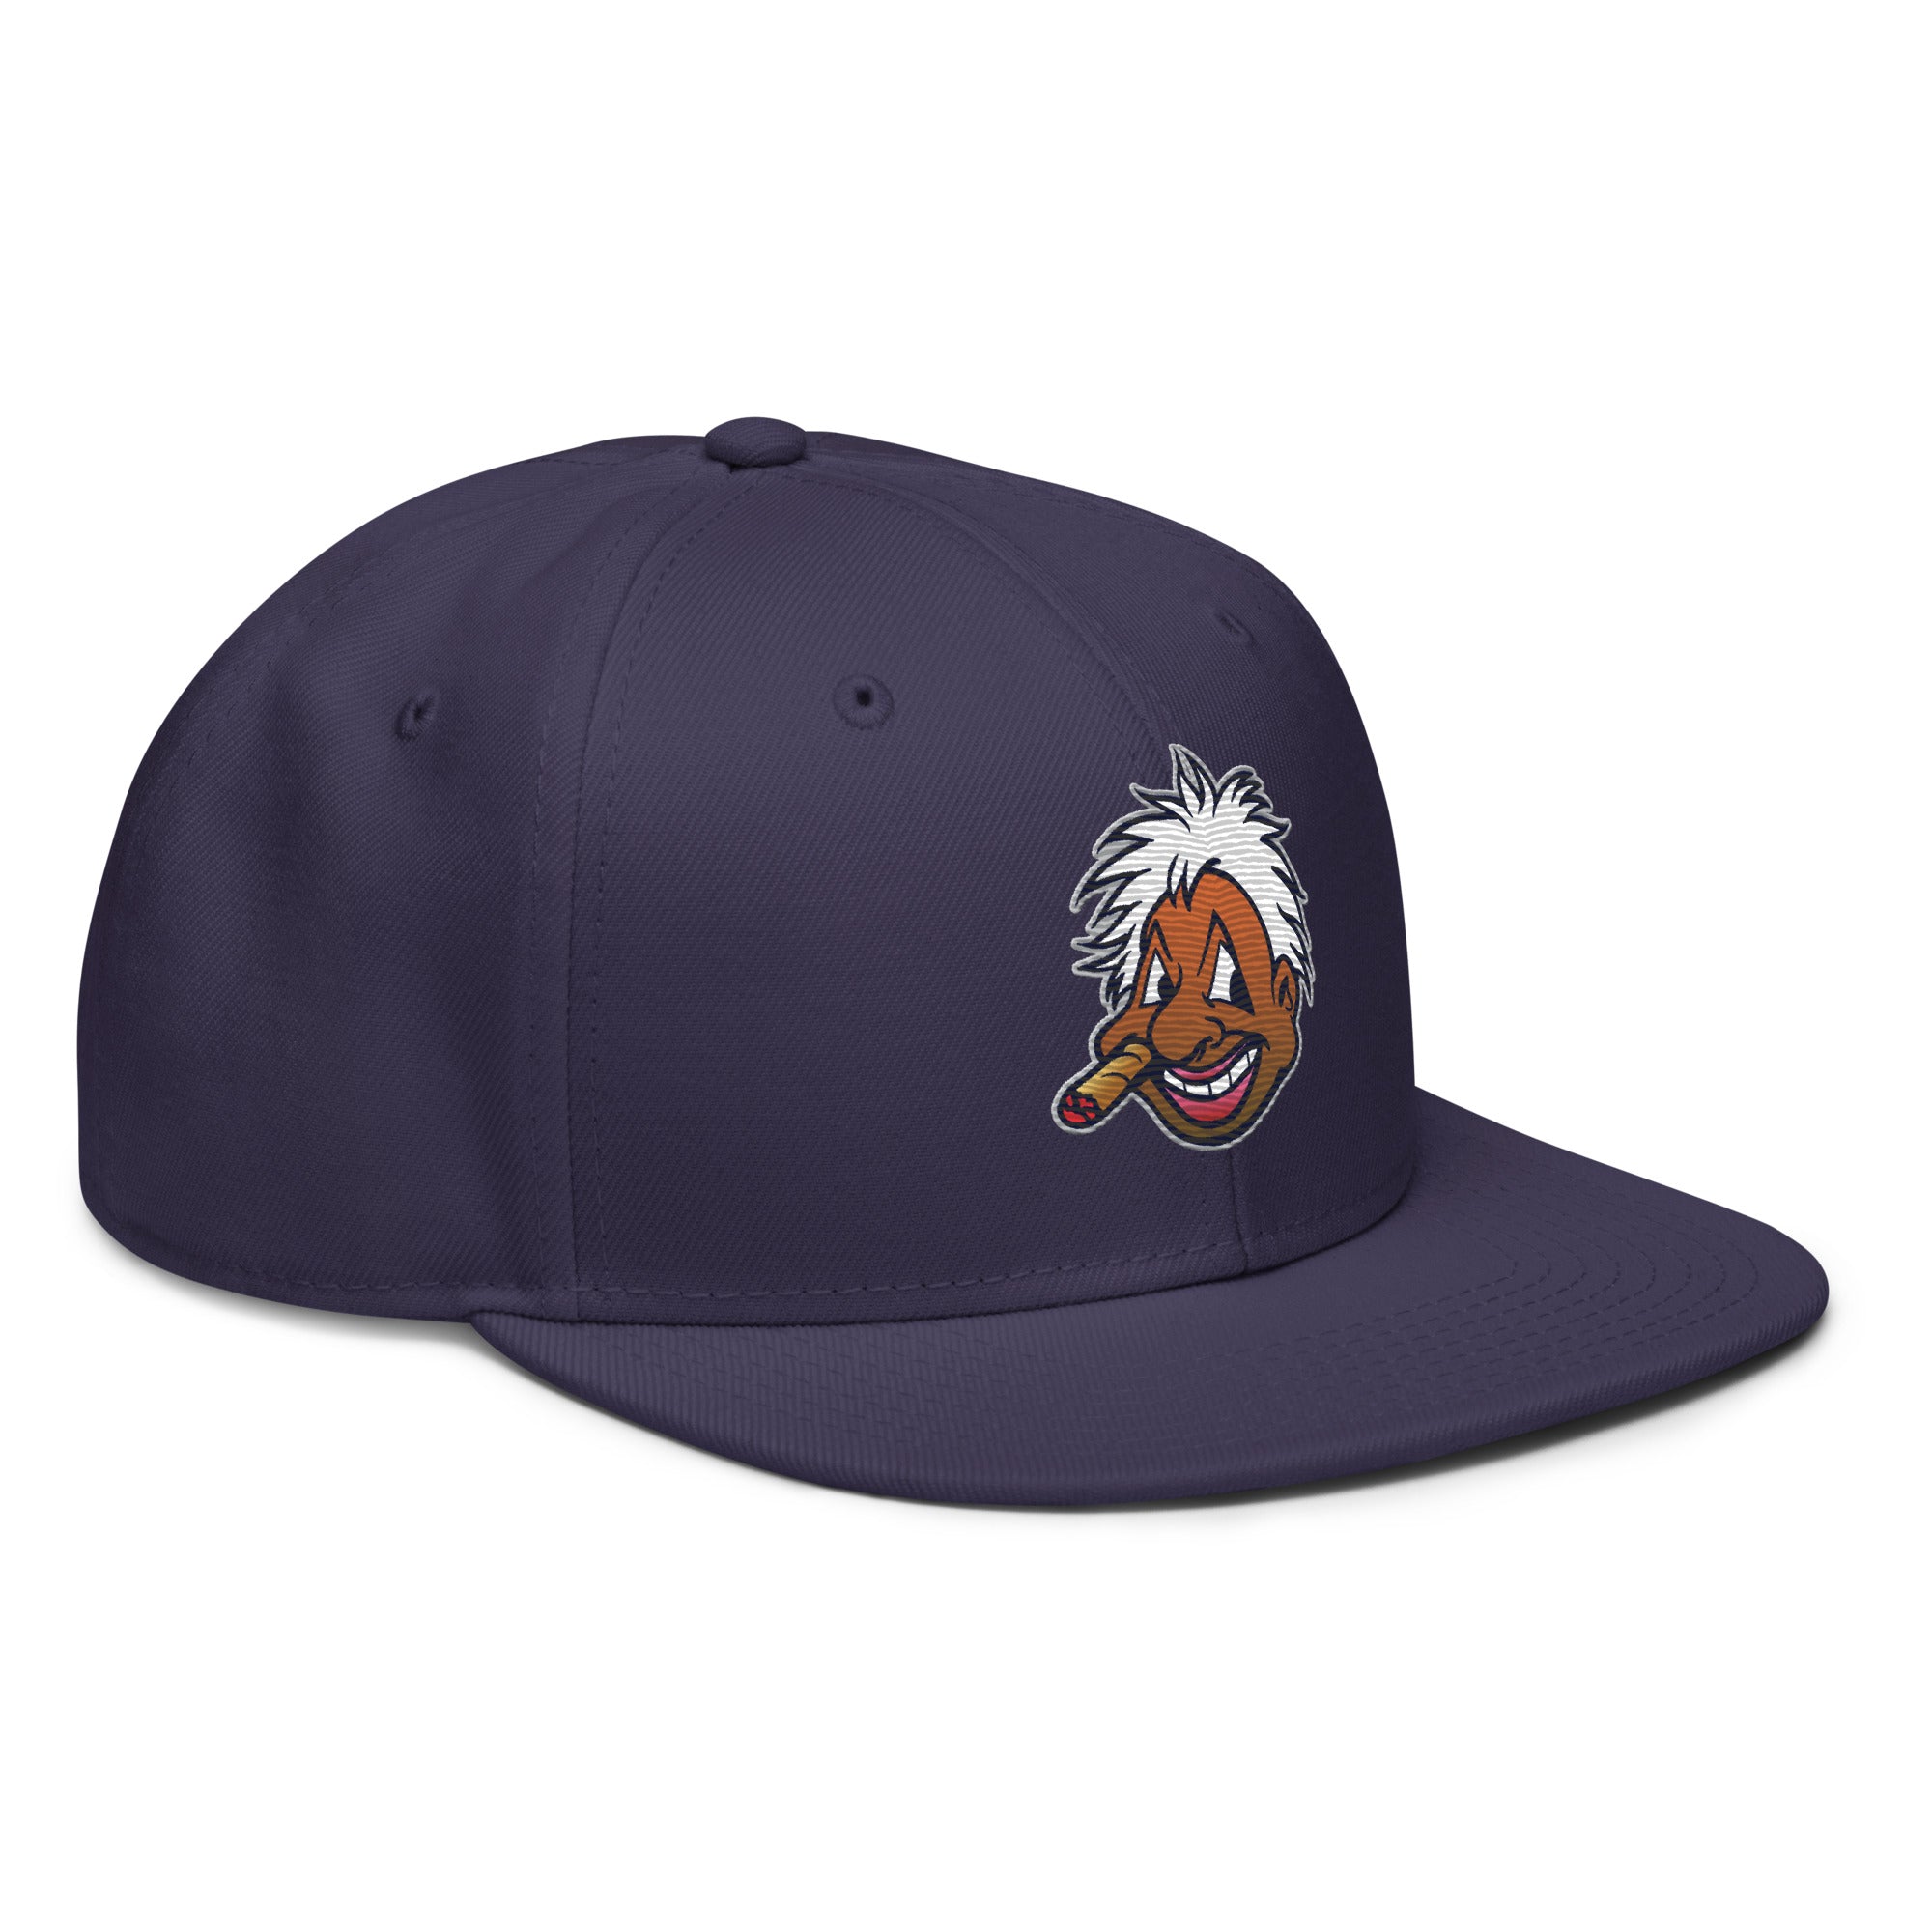 Jobu Major League Infinite Embroidery Snapback Hat